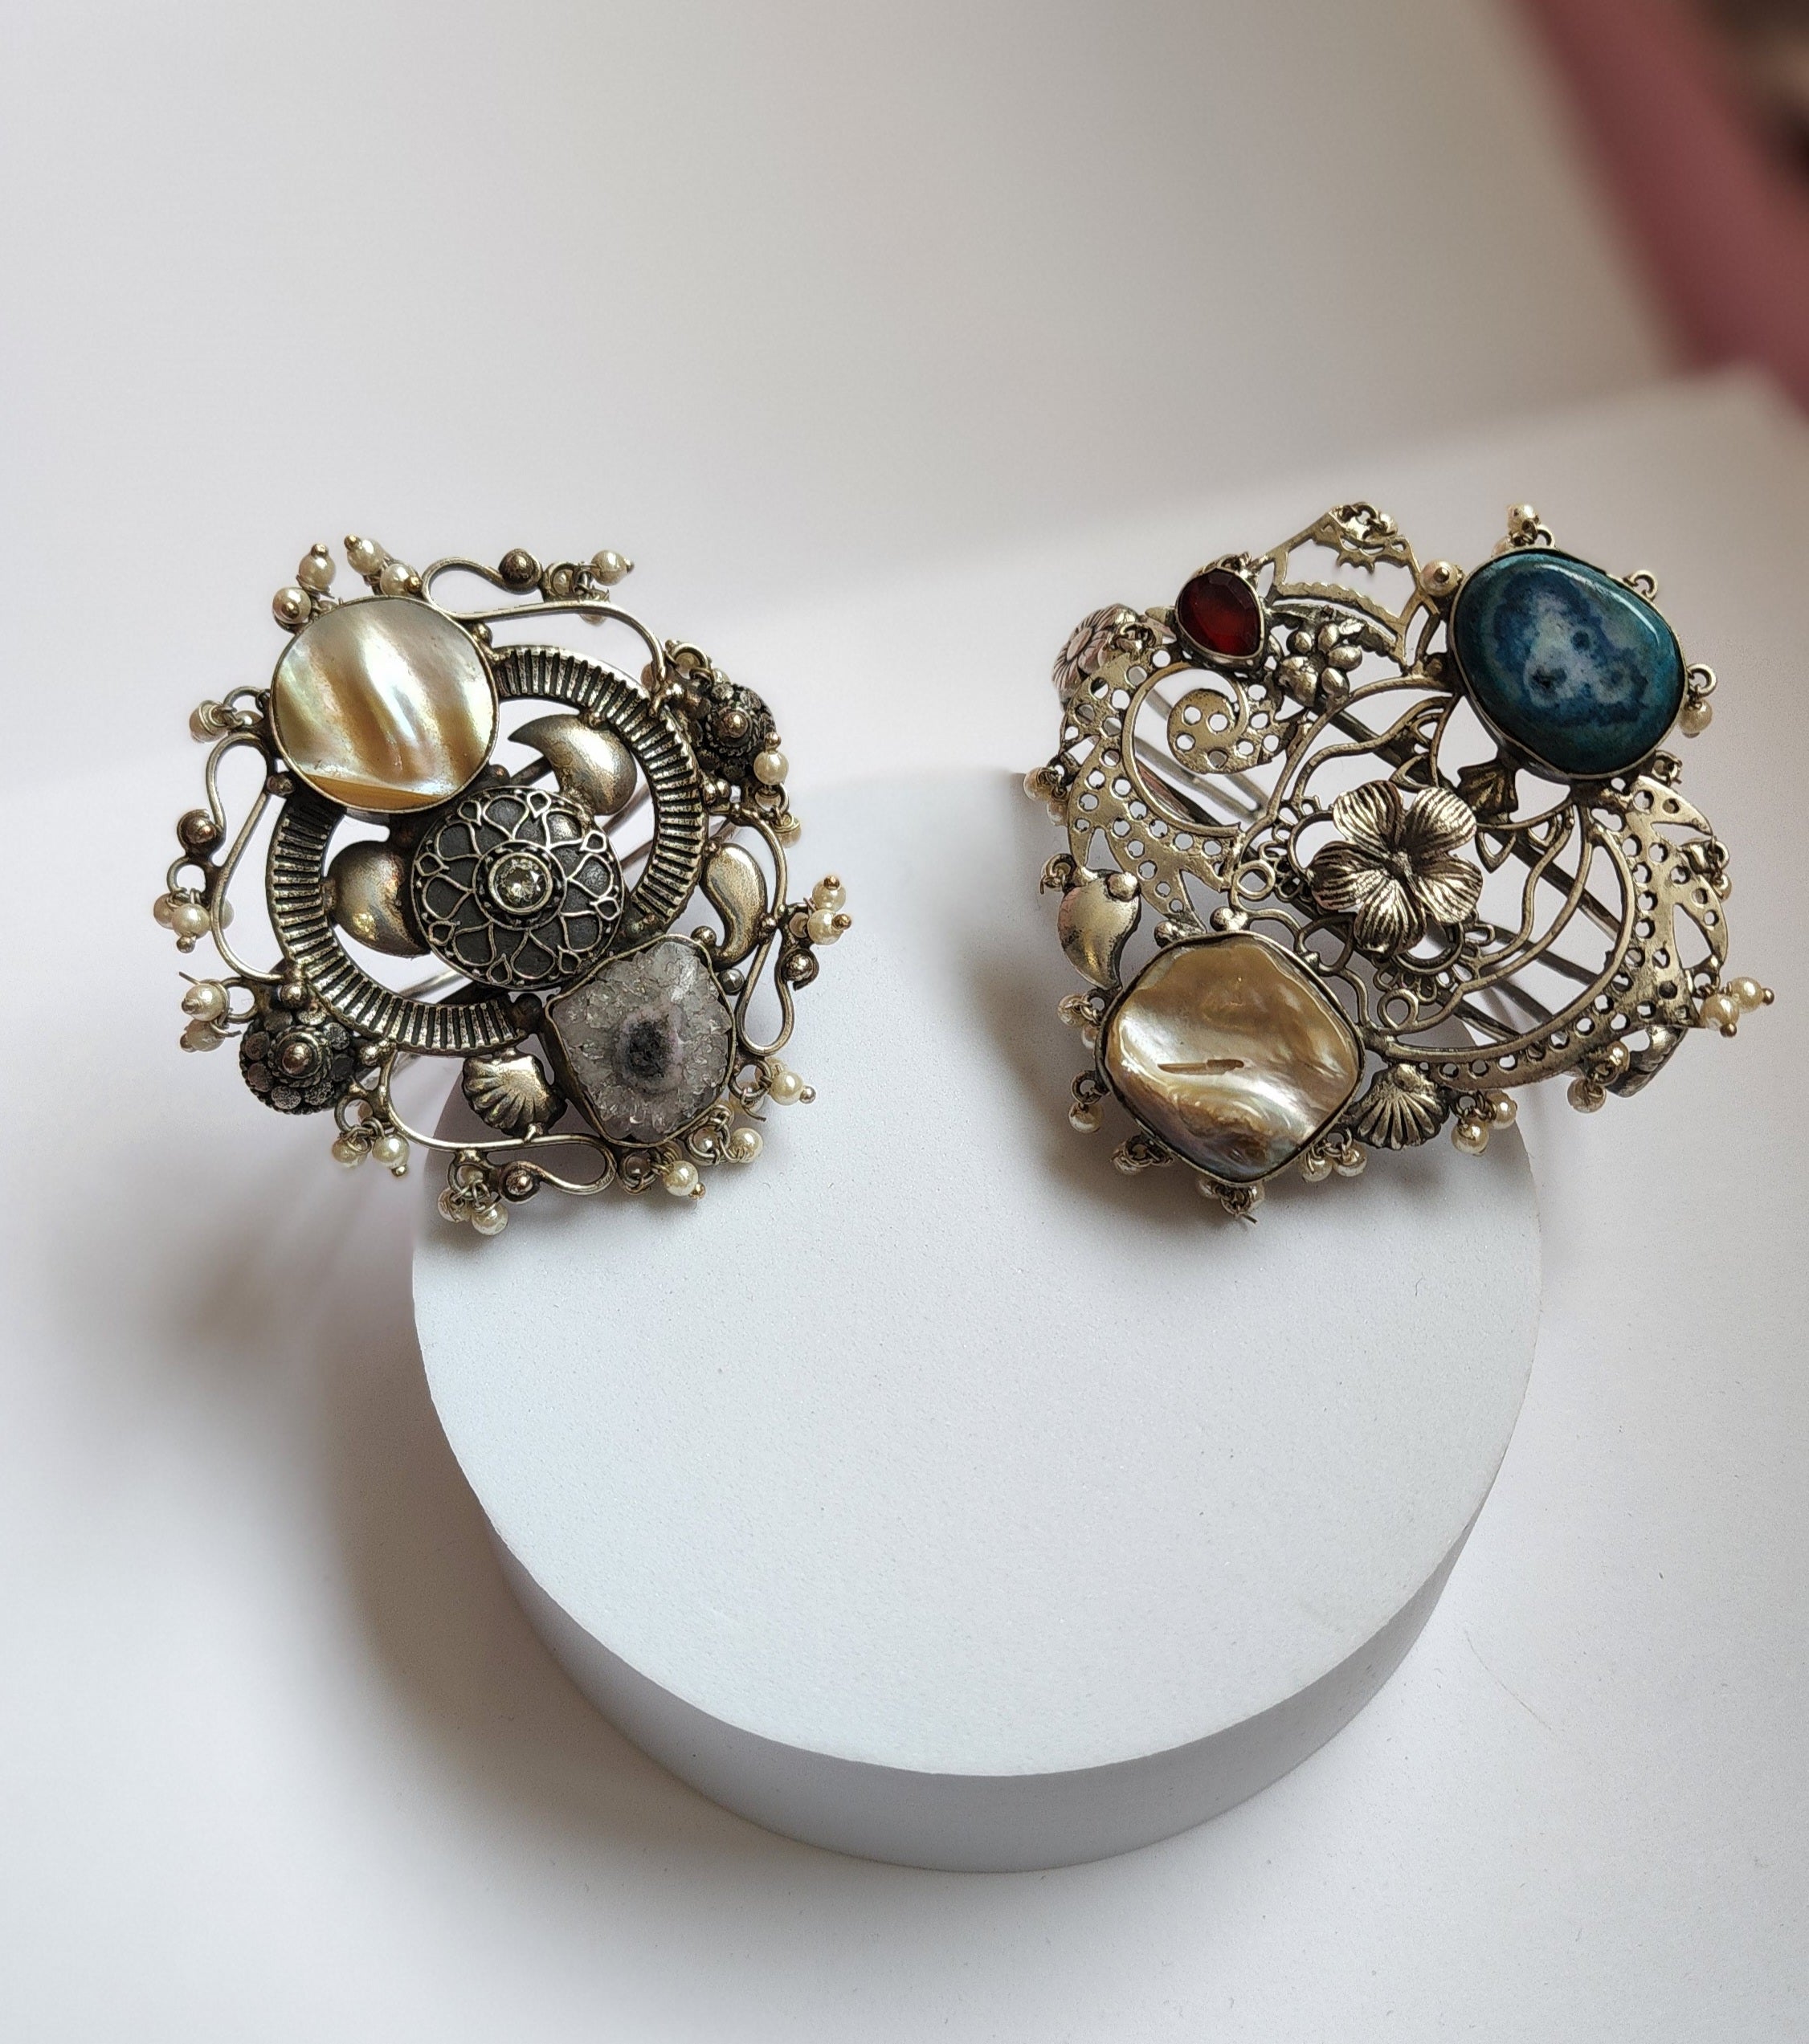 Abstract silver alike handmade Adjustable Bracelet bangle